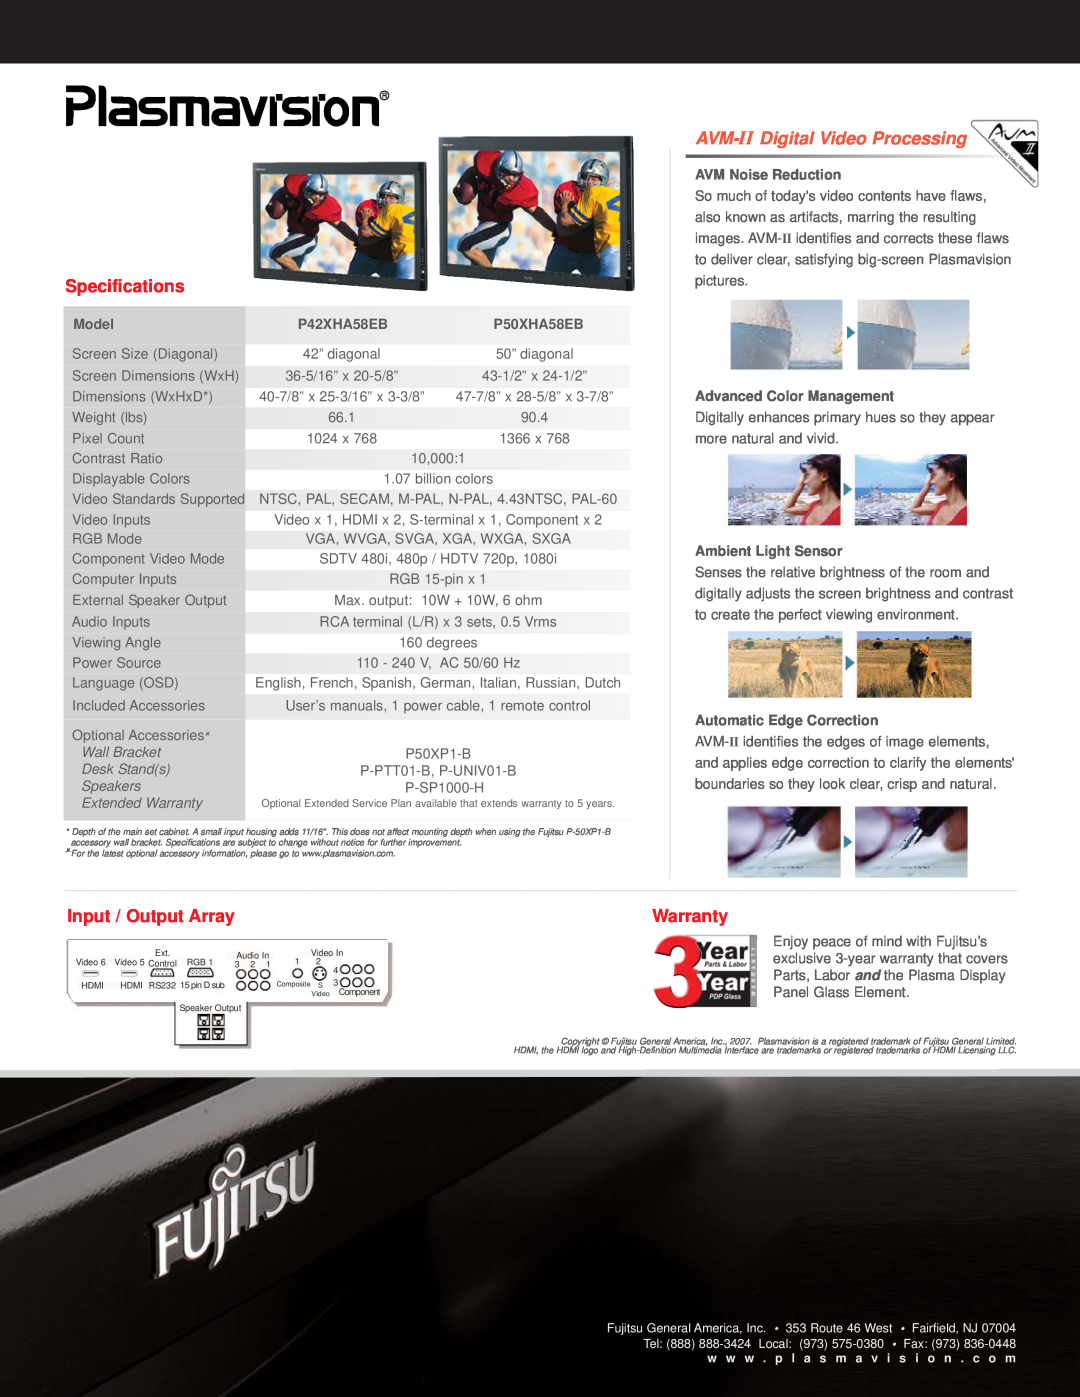 Fujitsu P42XHA58EB specifications Specifications, AVM-II Digital Video Processing, Input / Output Array, Warranty, Model 